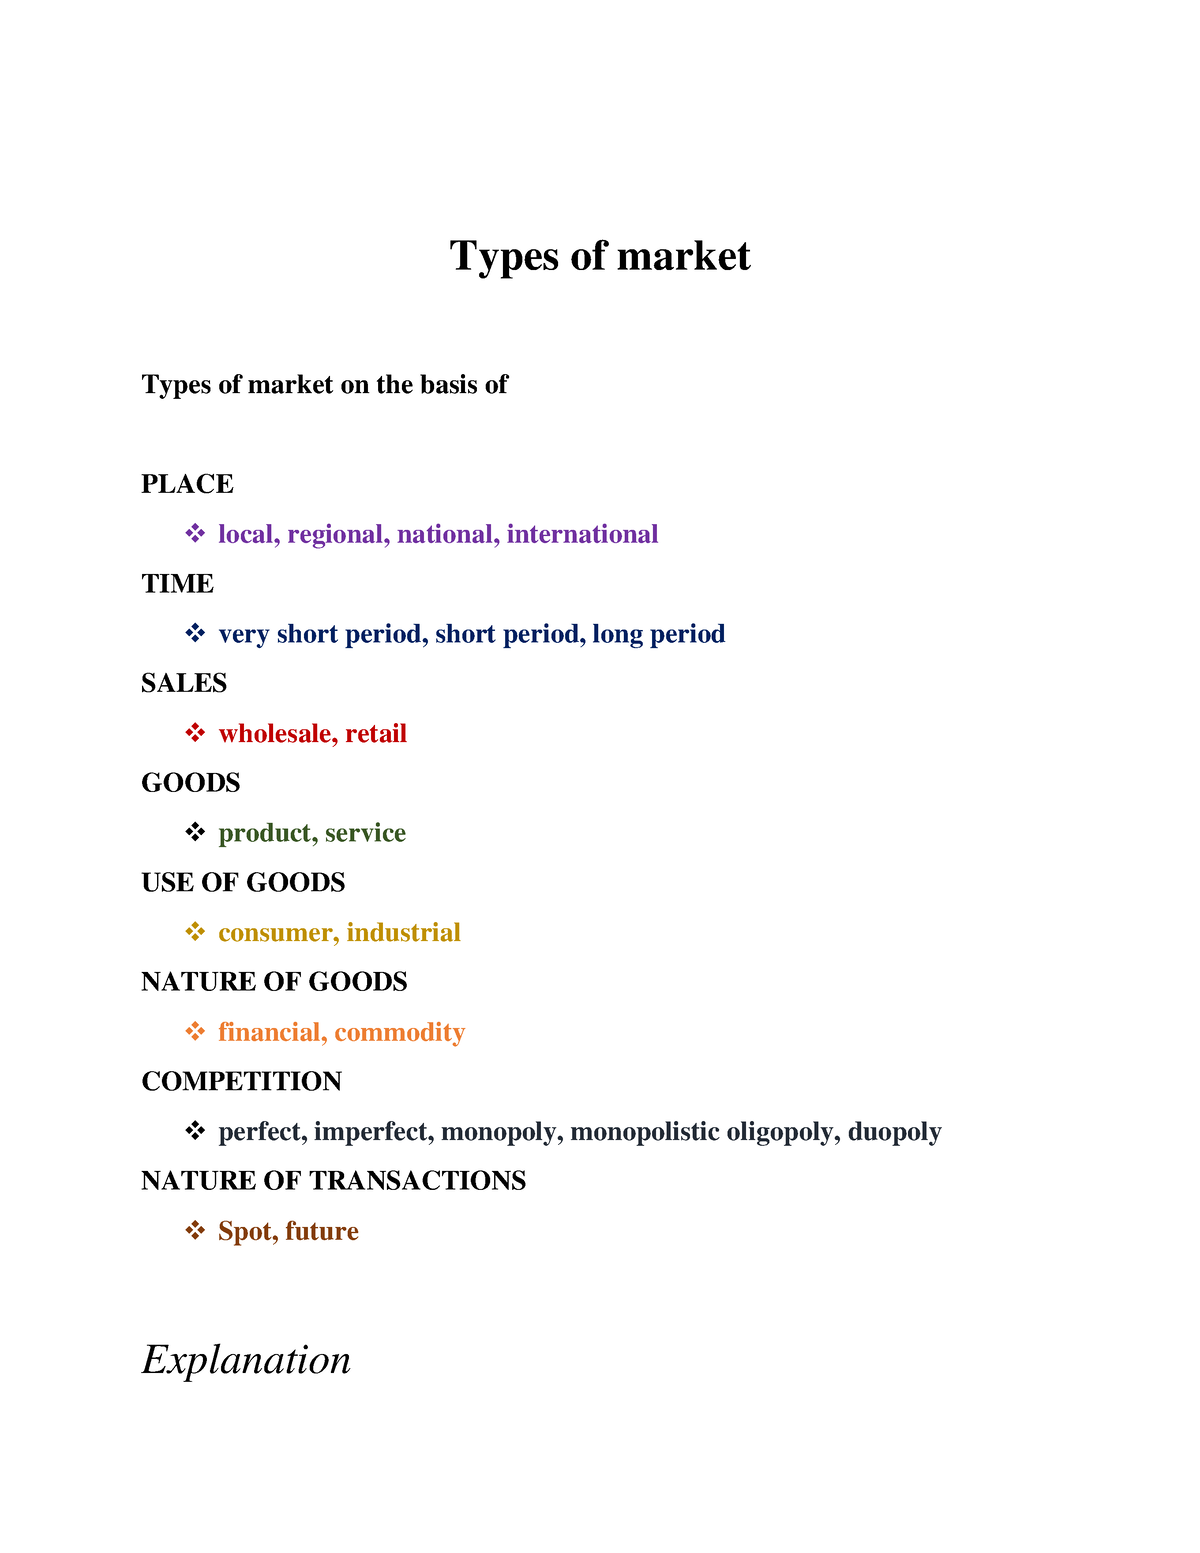 essay on types of markets